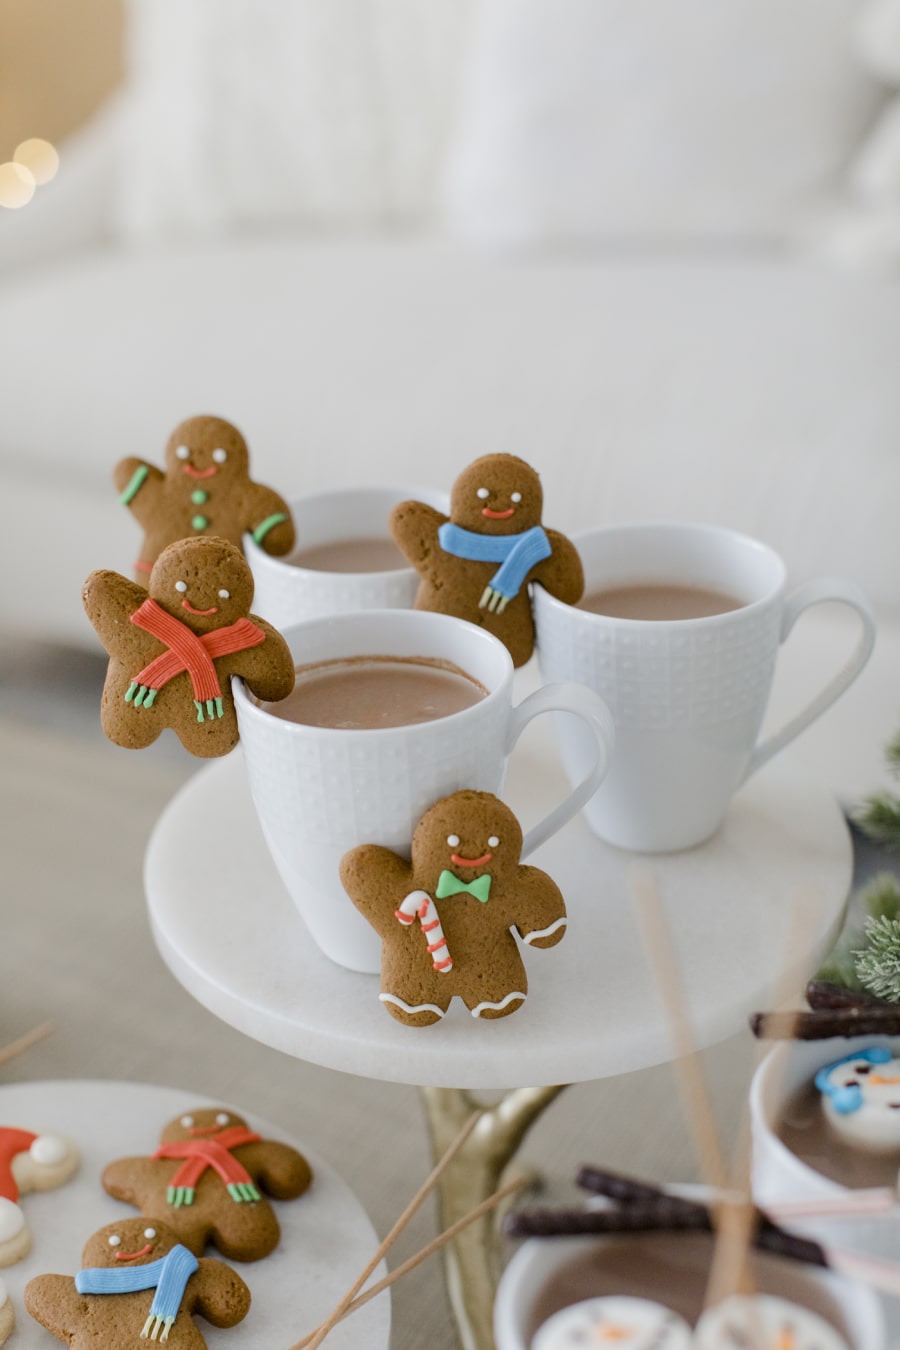 Holiday Coffee and Hot Chocolate Bar